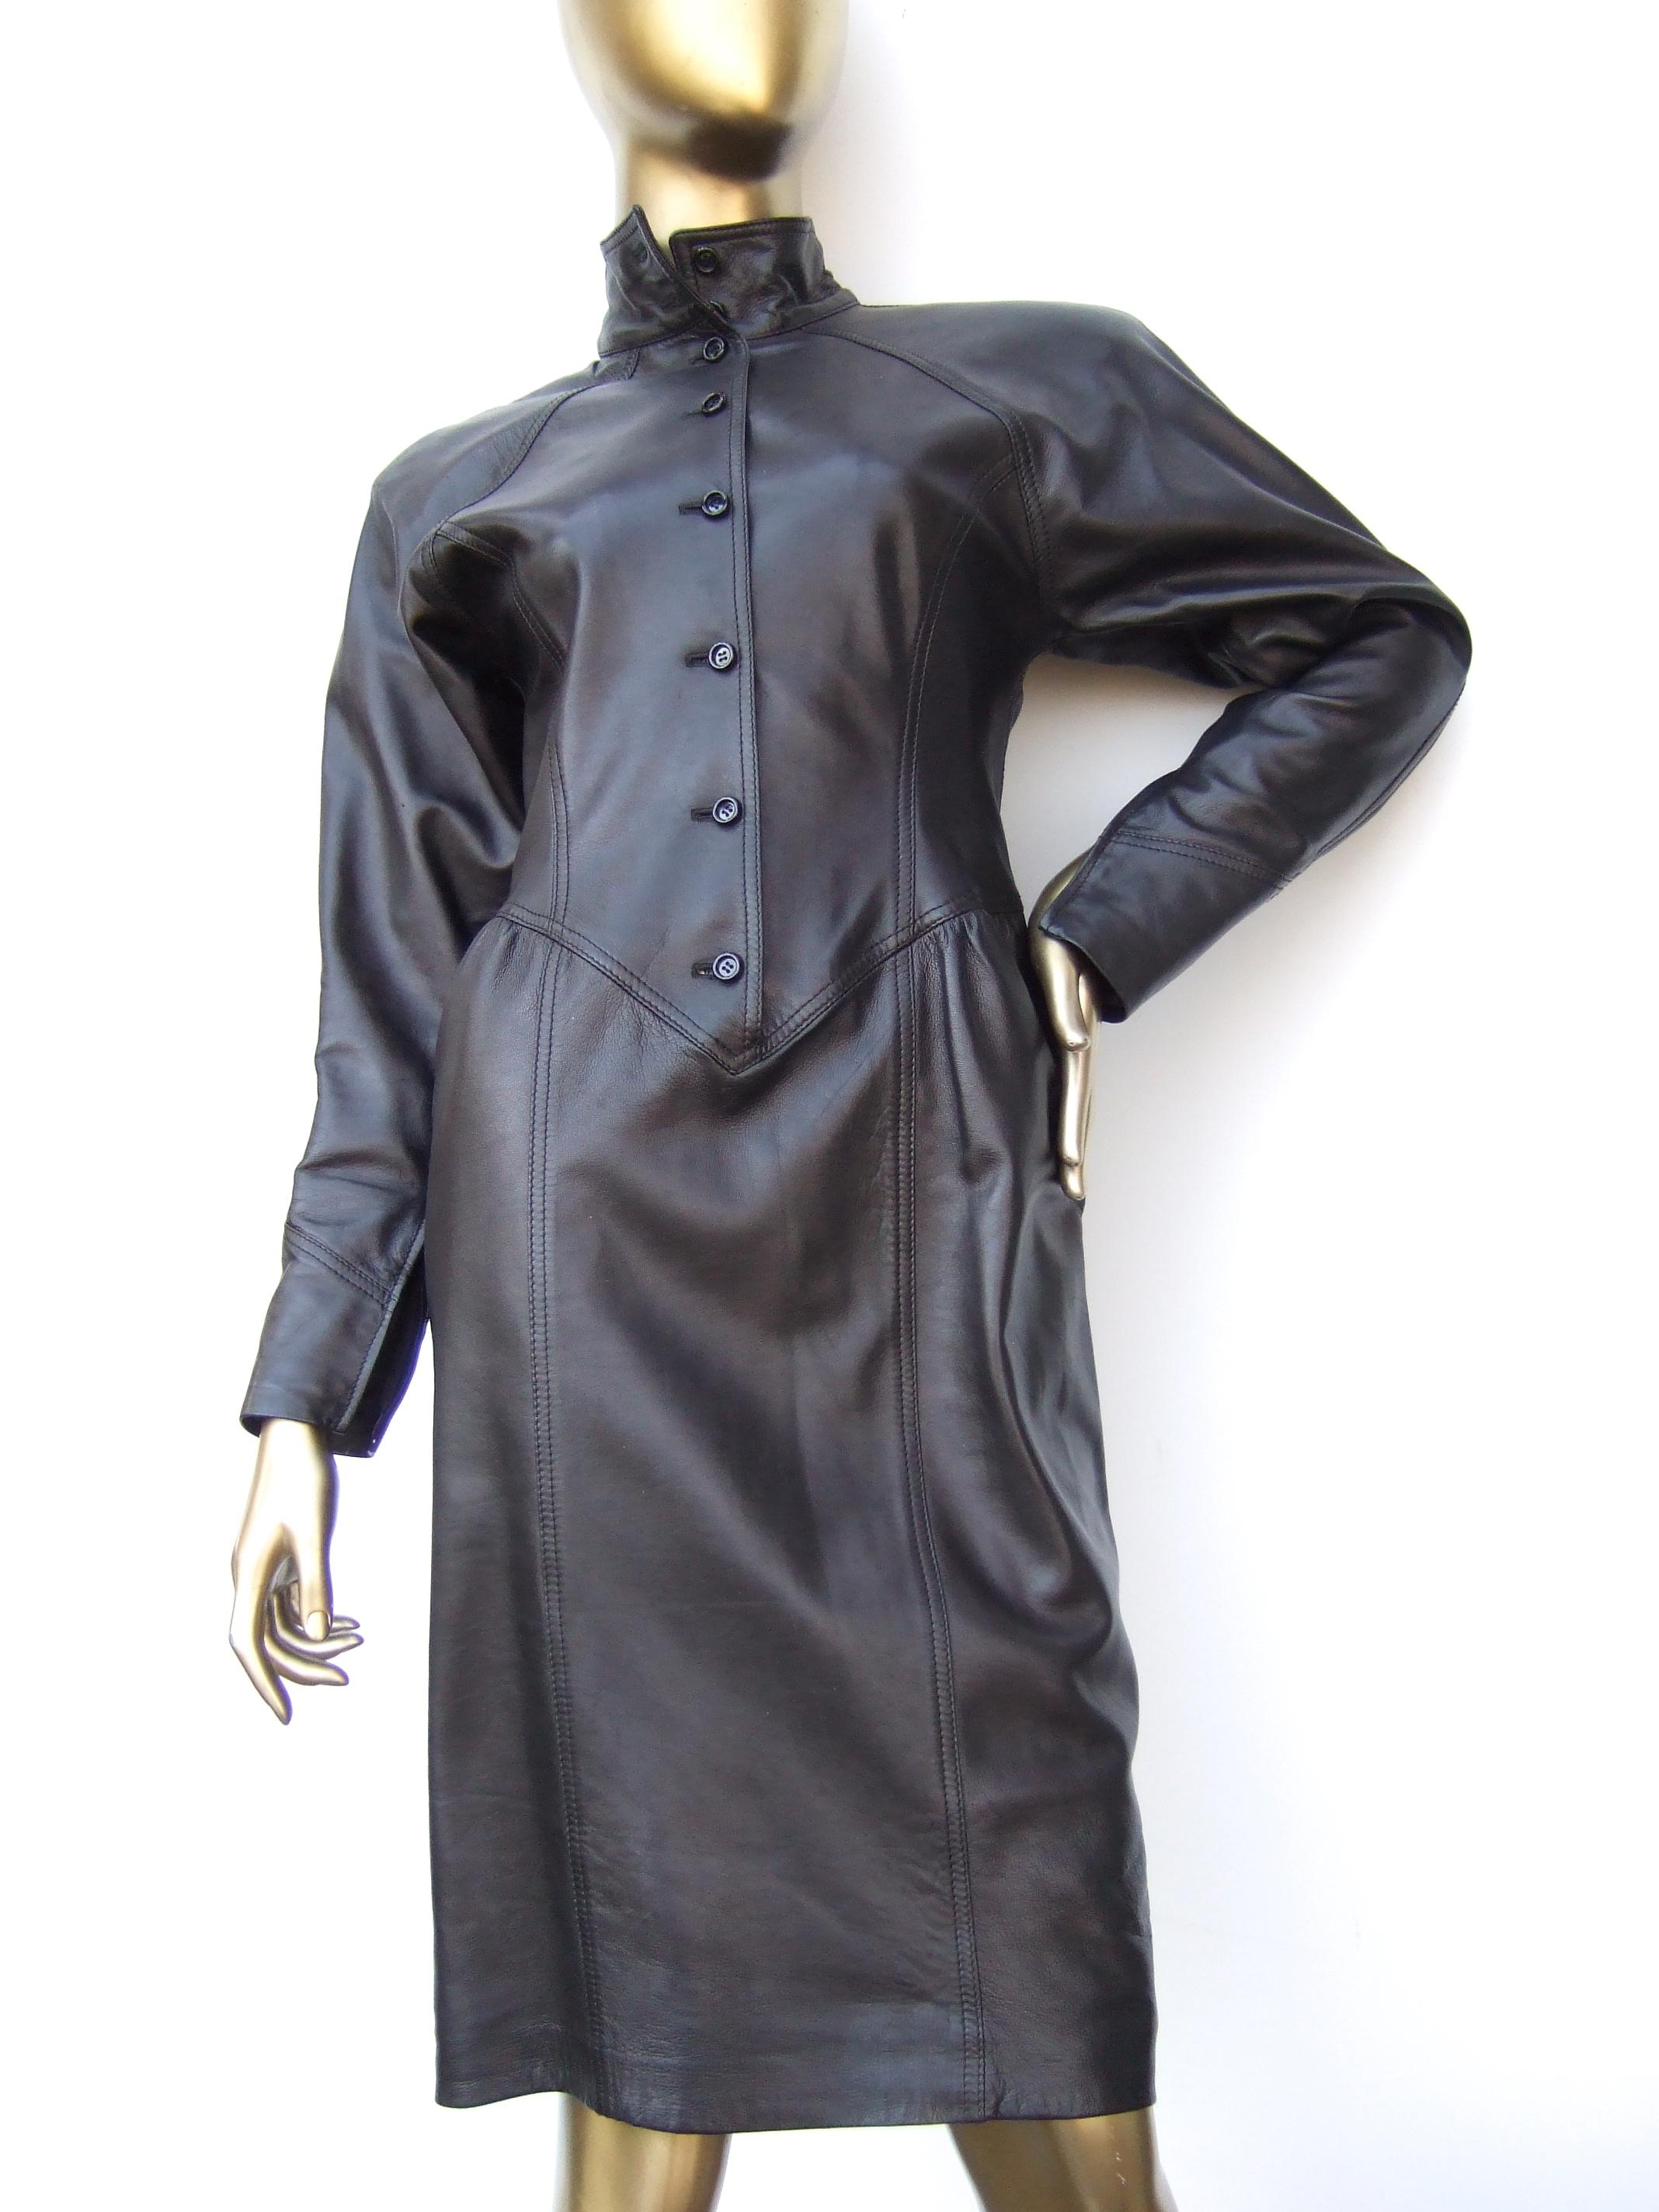 Emanuel Ungaro Paris Avant Garde Edgy Brown Leather Dress Made in Italy c 1980s en vente 12